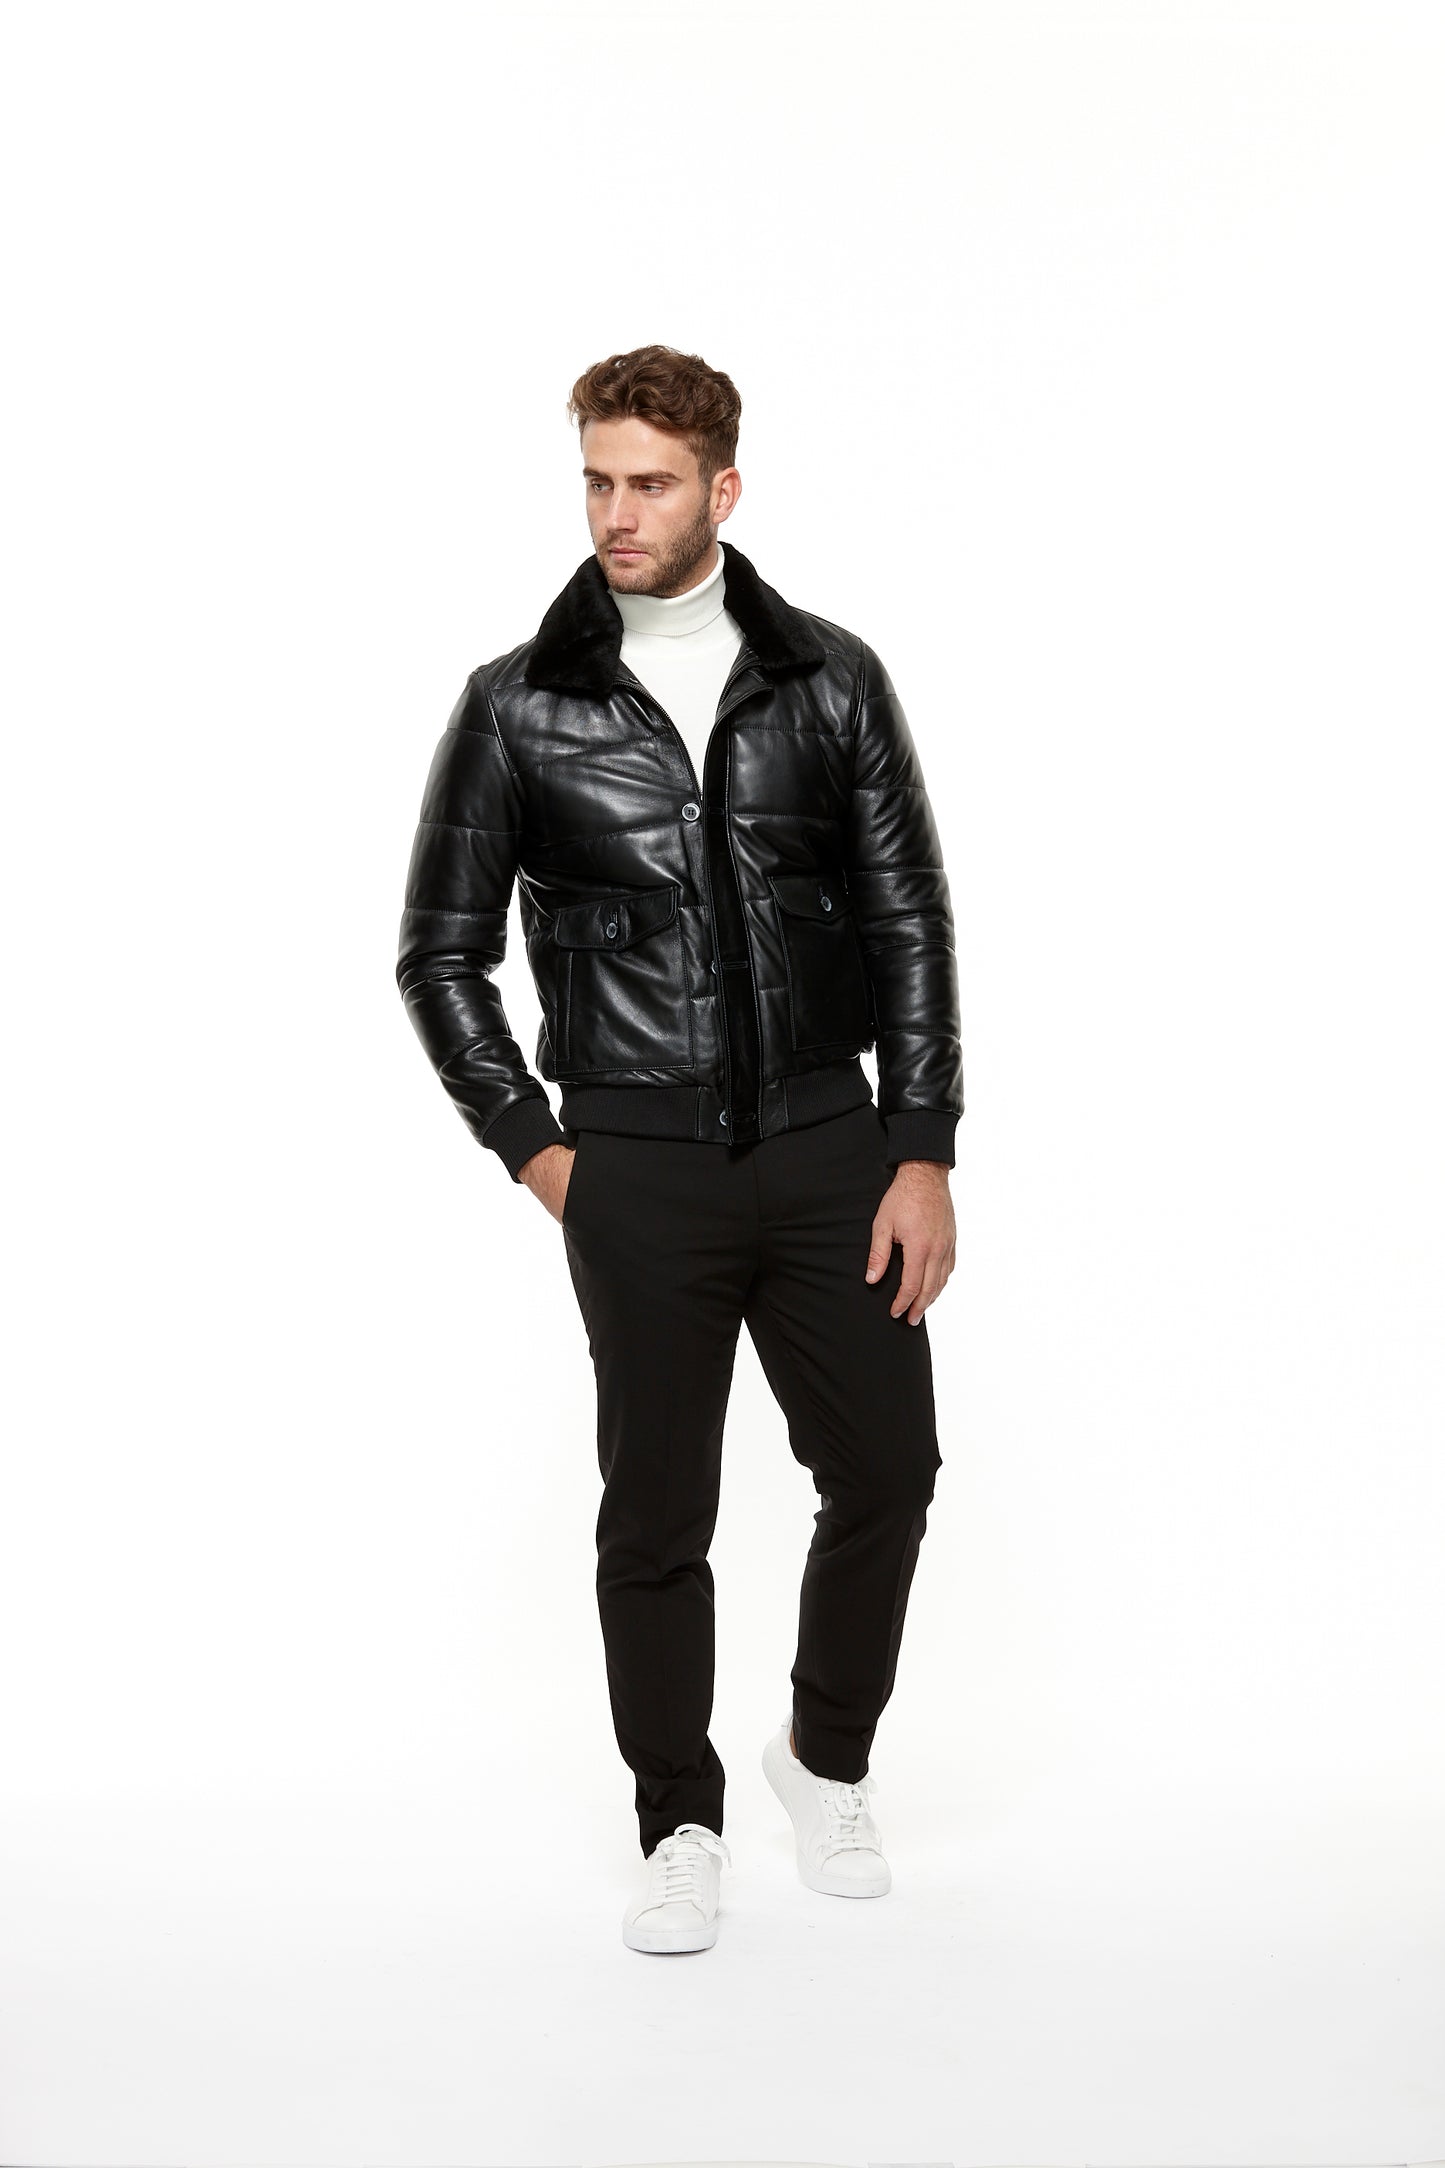 Wolff Leather Jacket